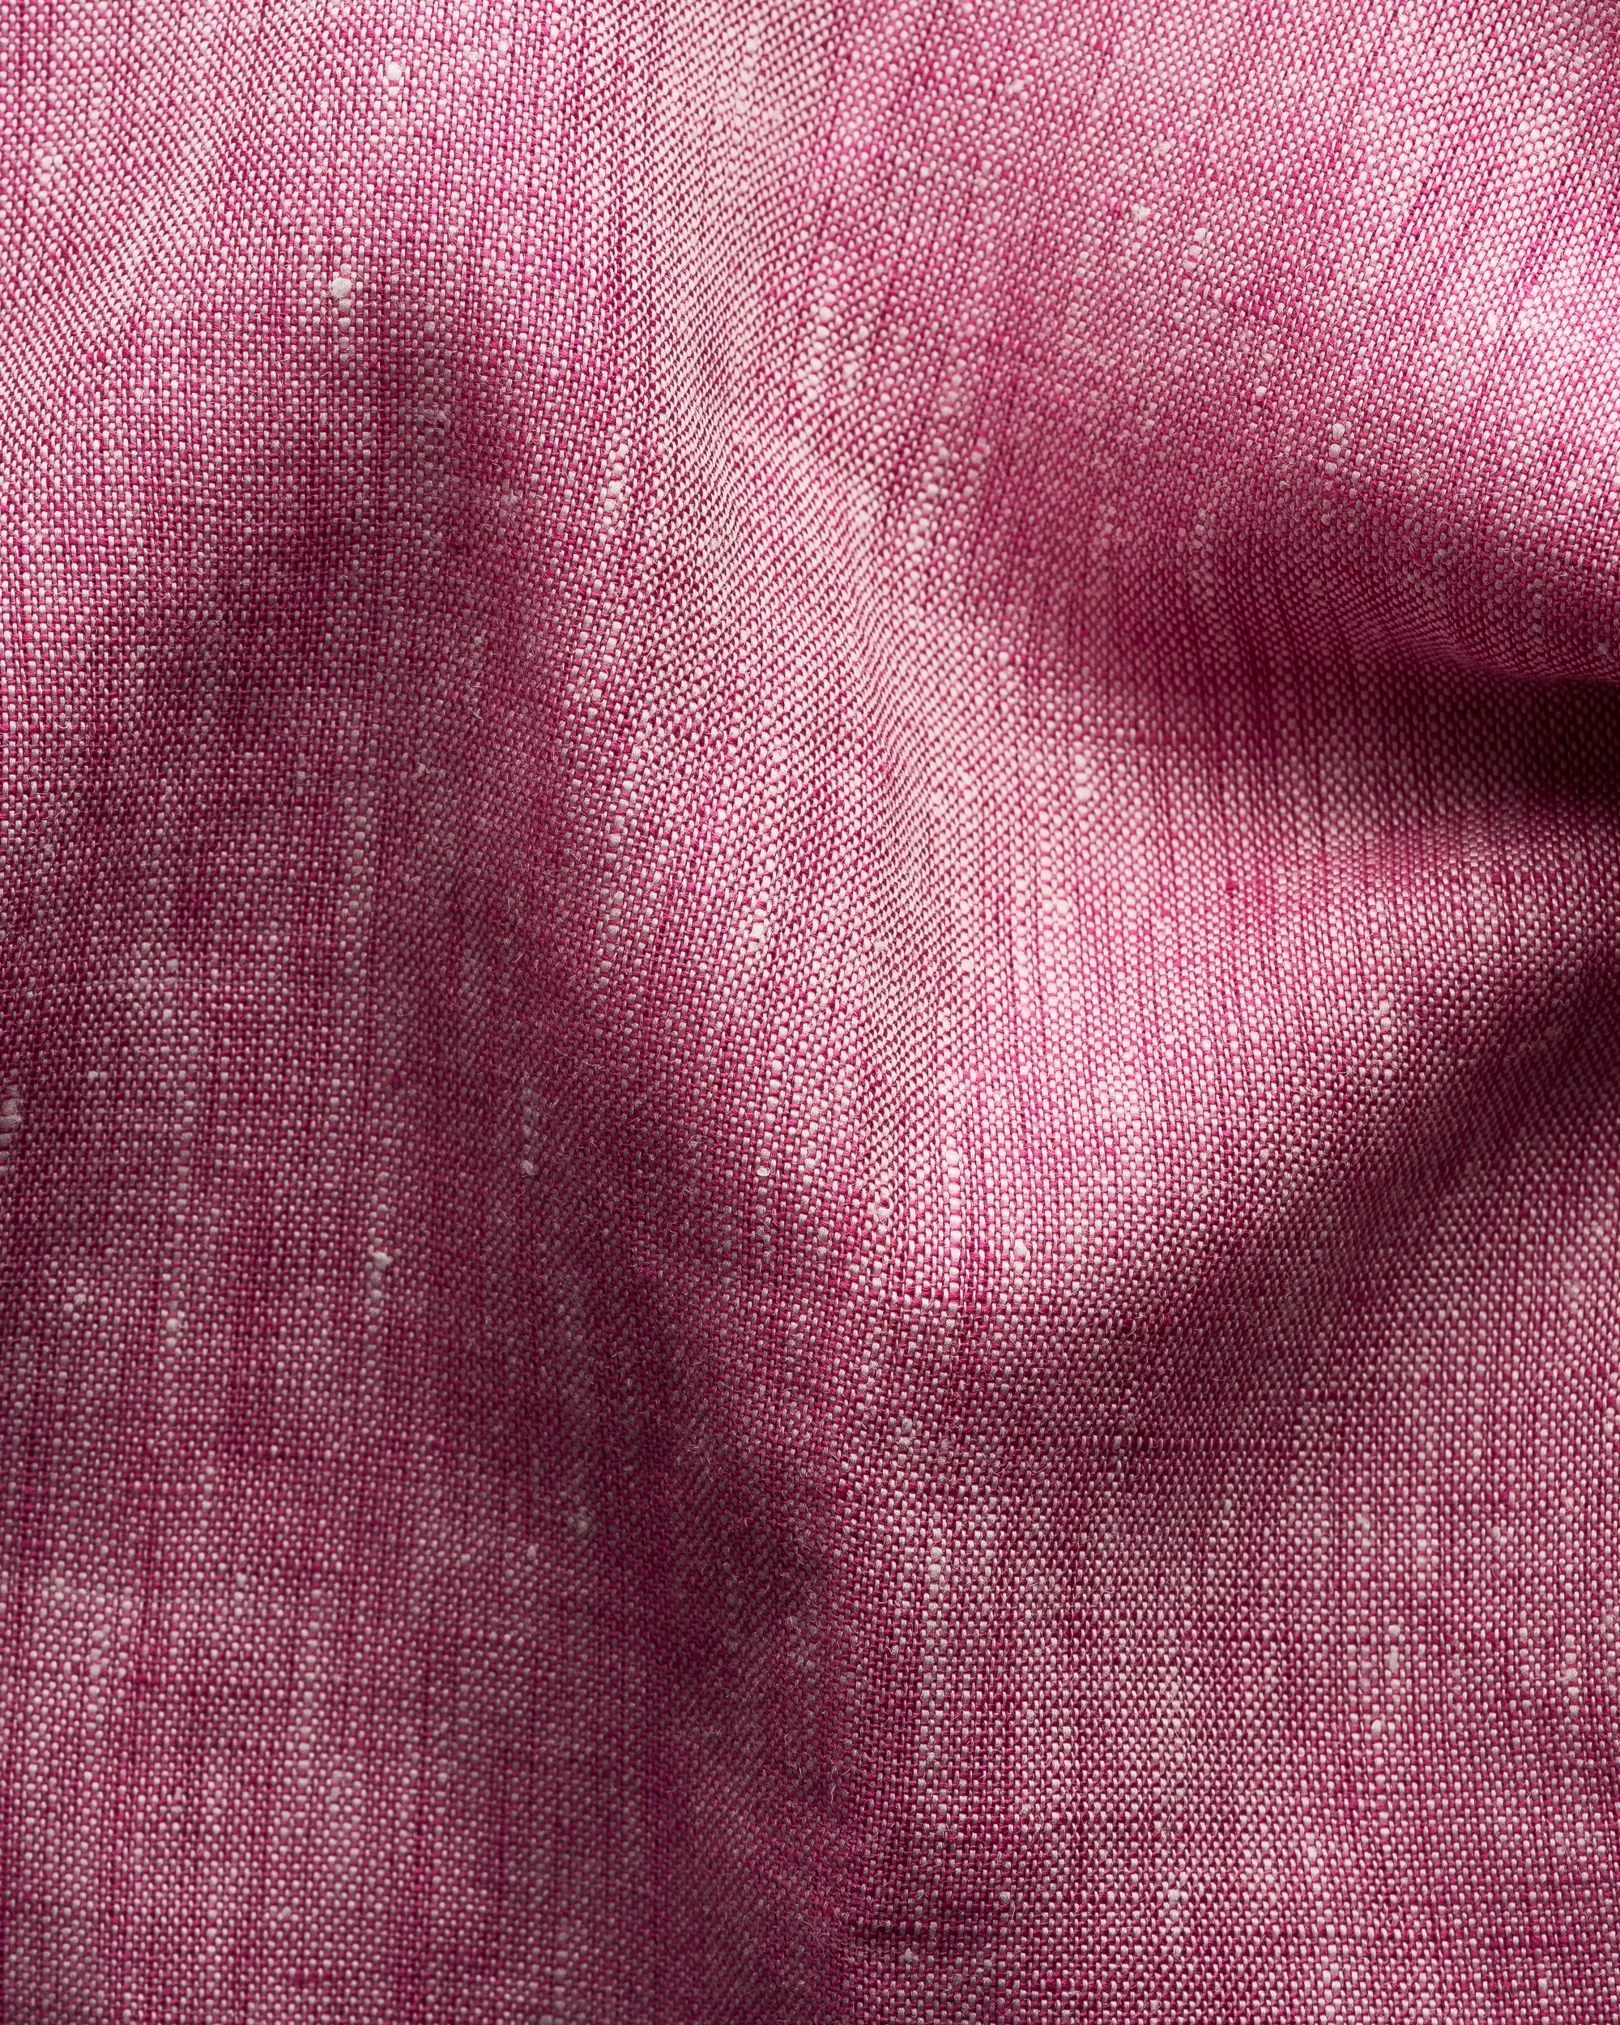 Eton - wide spread pink linen